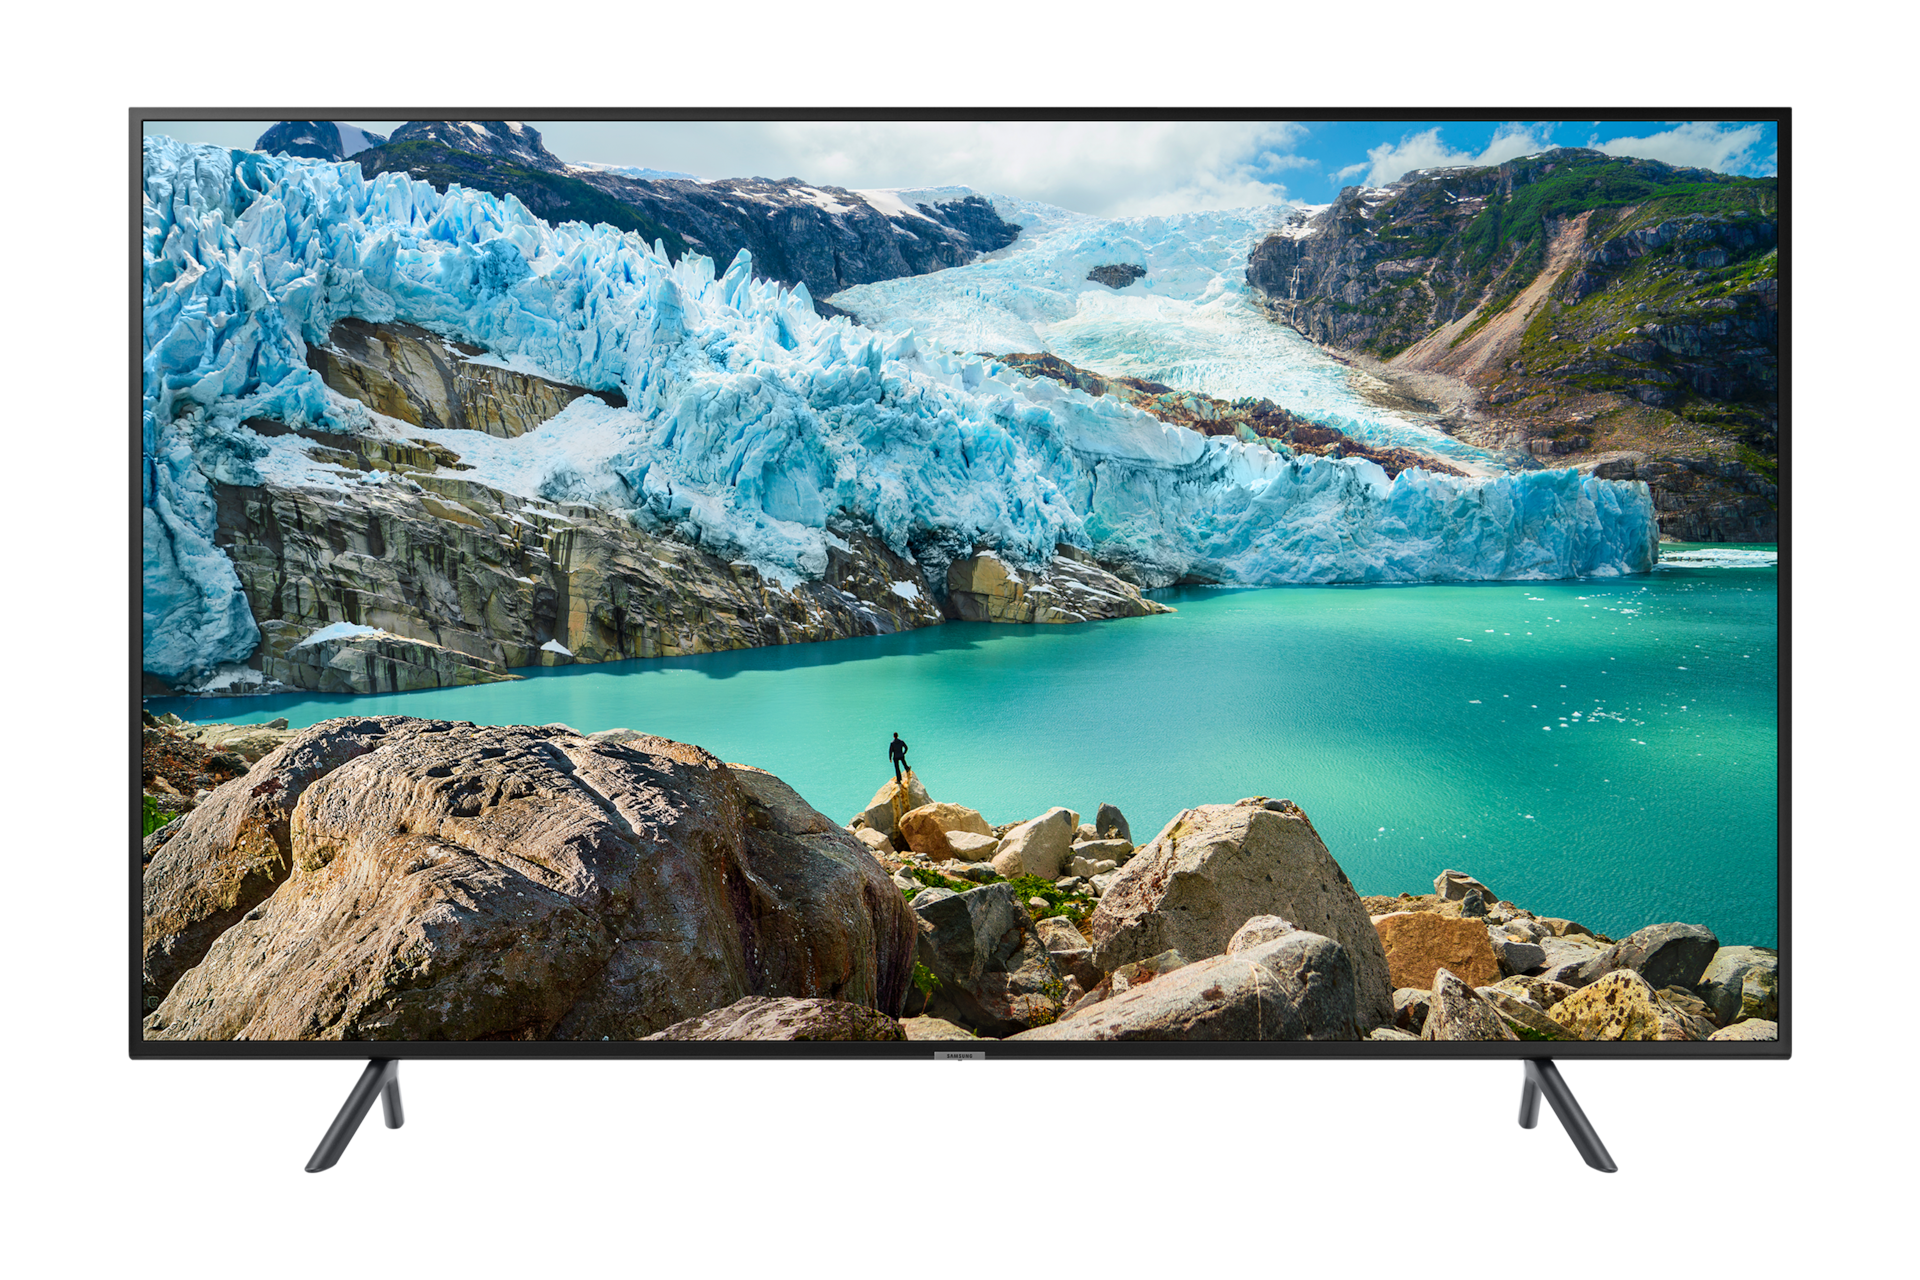 10+ Samsung 55ru7100 smart 4k uhd television 55 inch price in india info